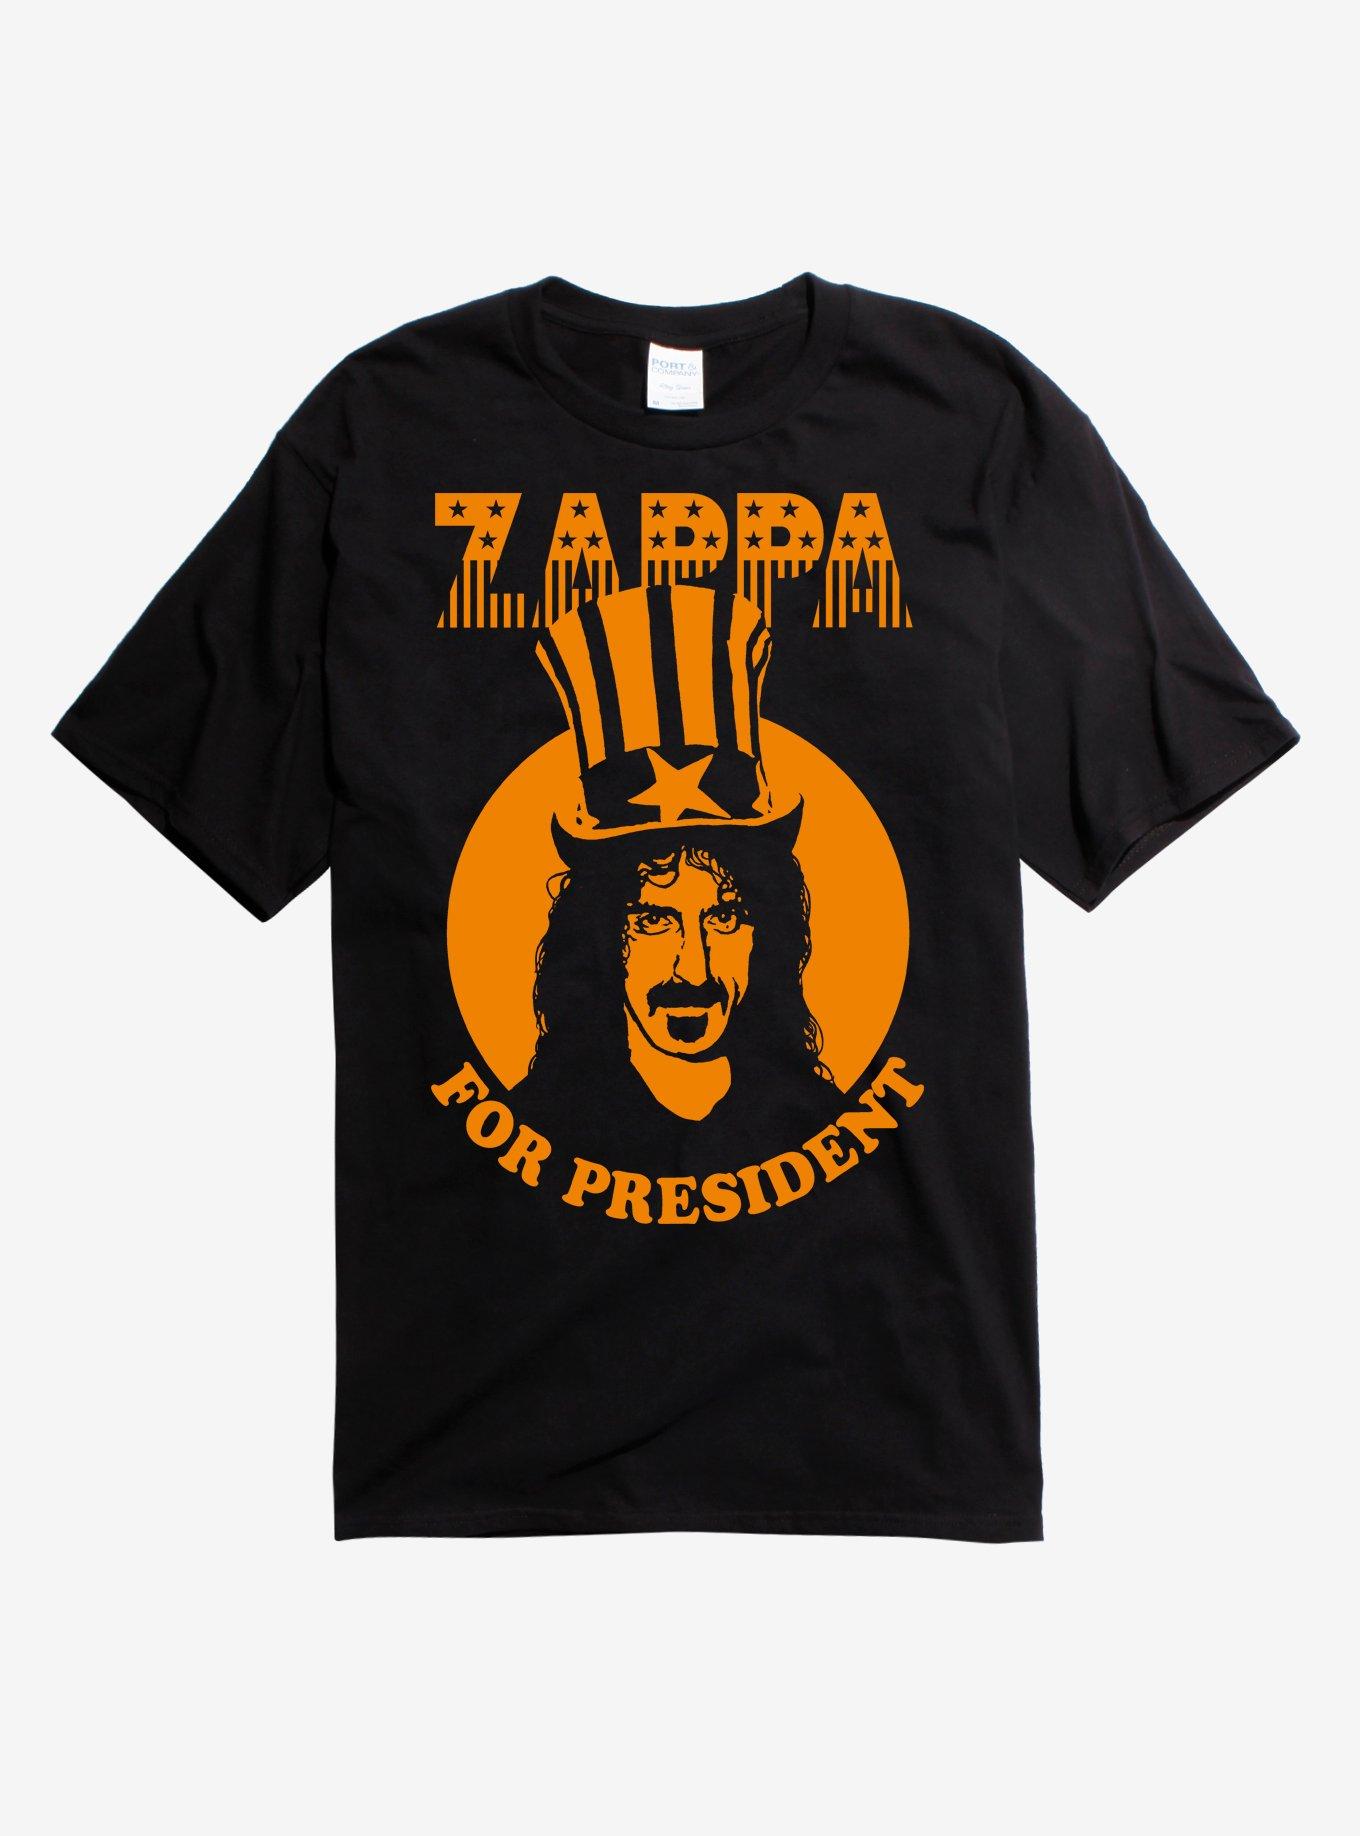 Frank Zappa For President T-Shirt